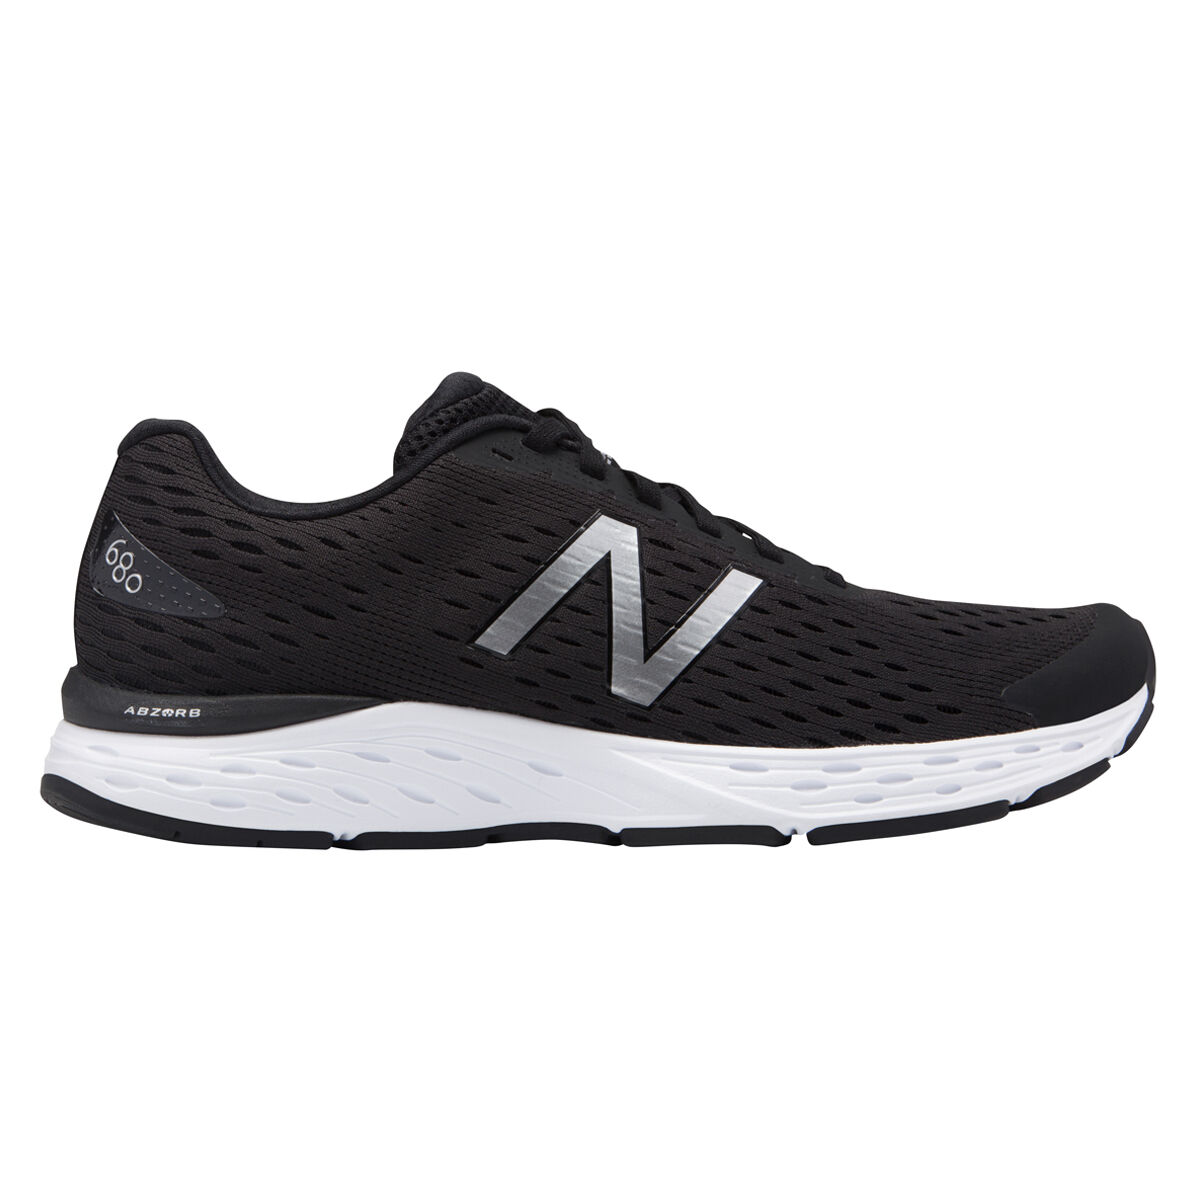 New Balance 680 v5 Mens Running Shoes | Rebel Sport